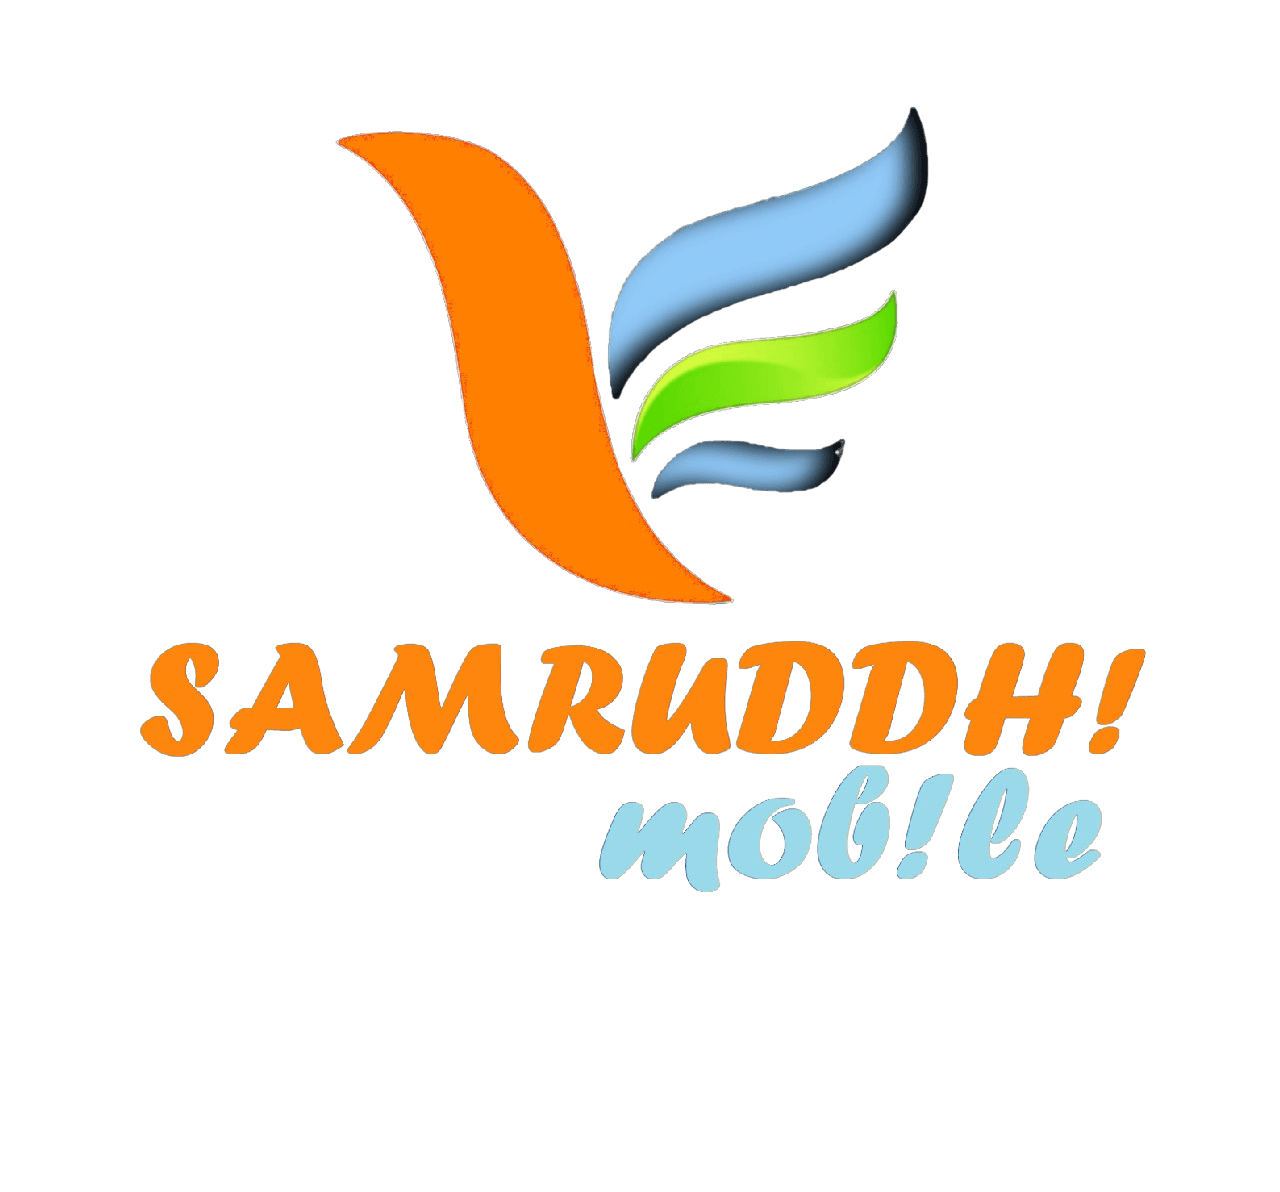 Samruddhi Agro Group